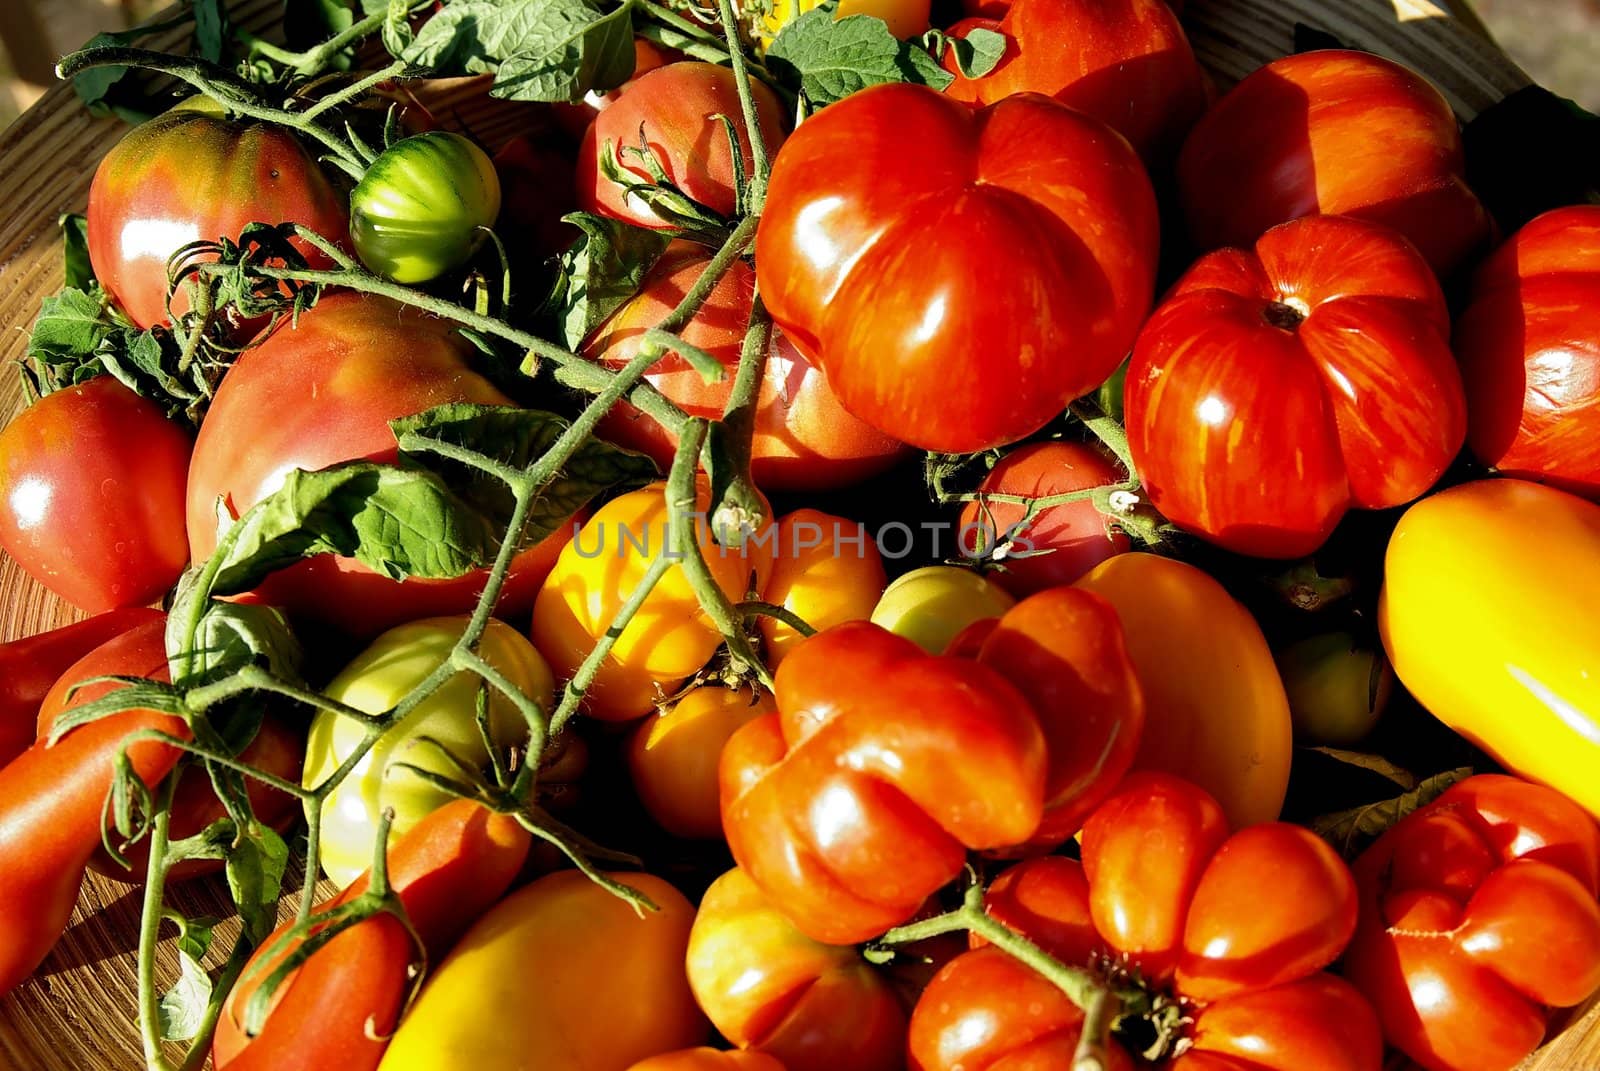 Tomato Basket by FotoFrank